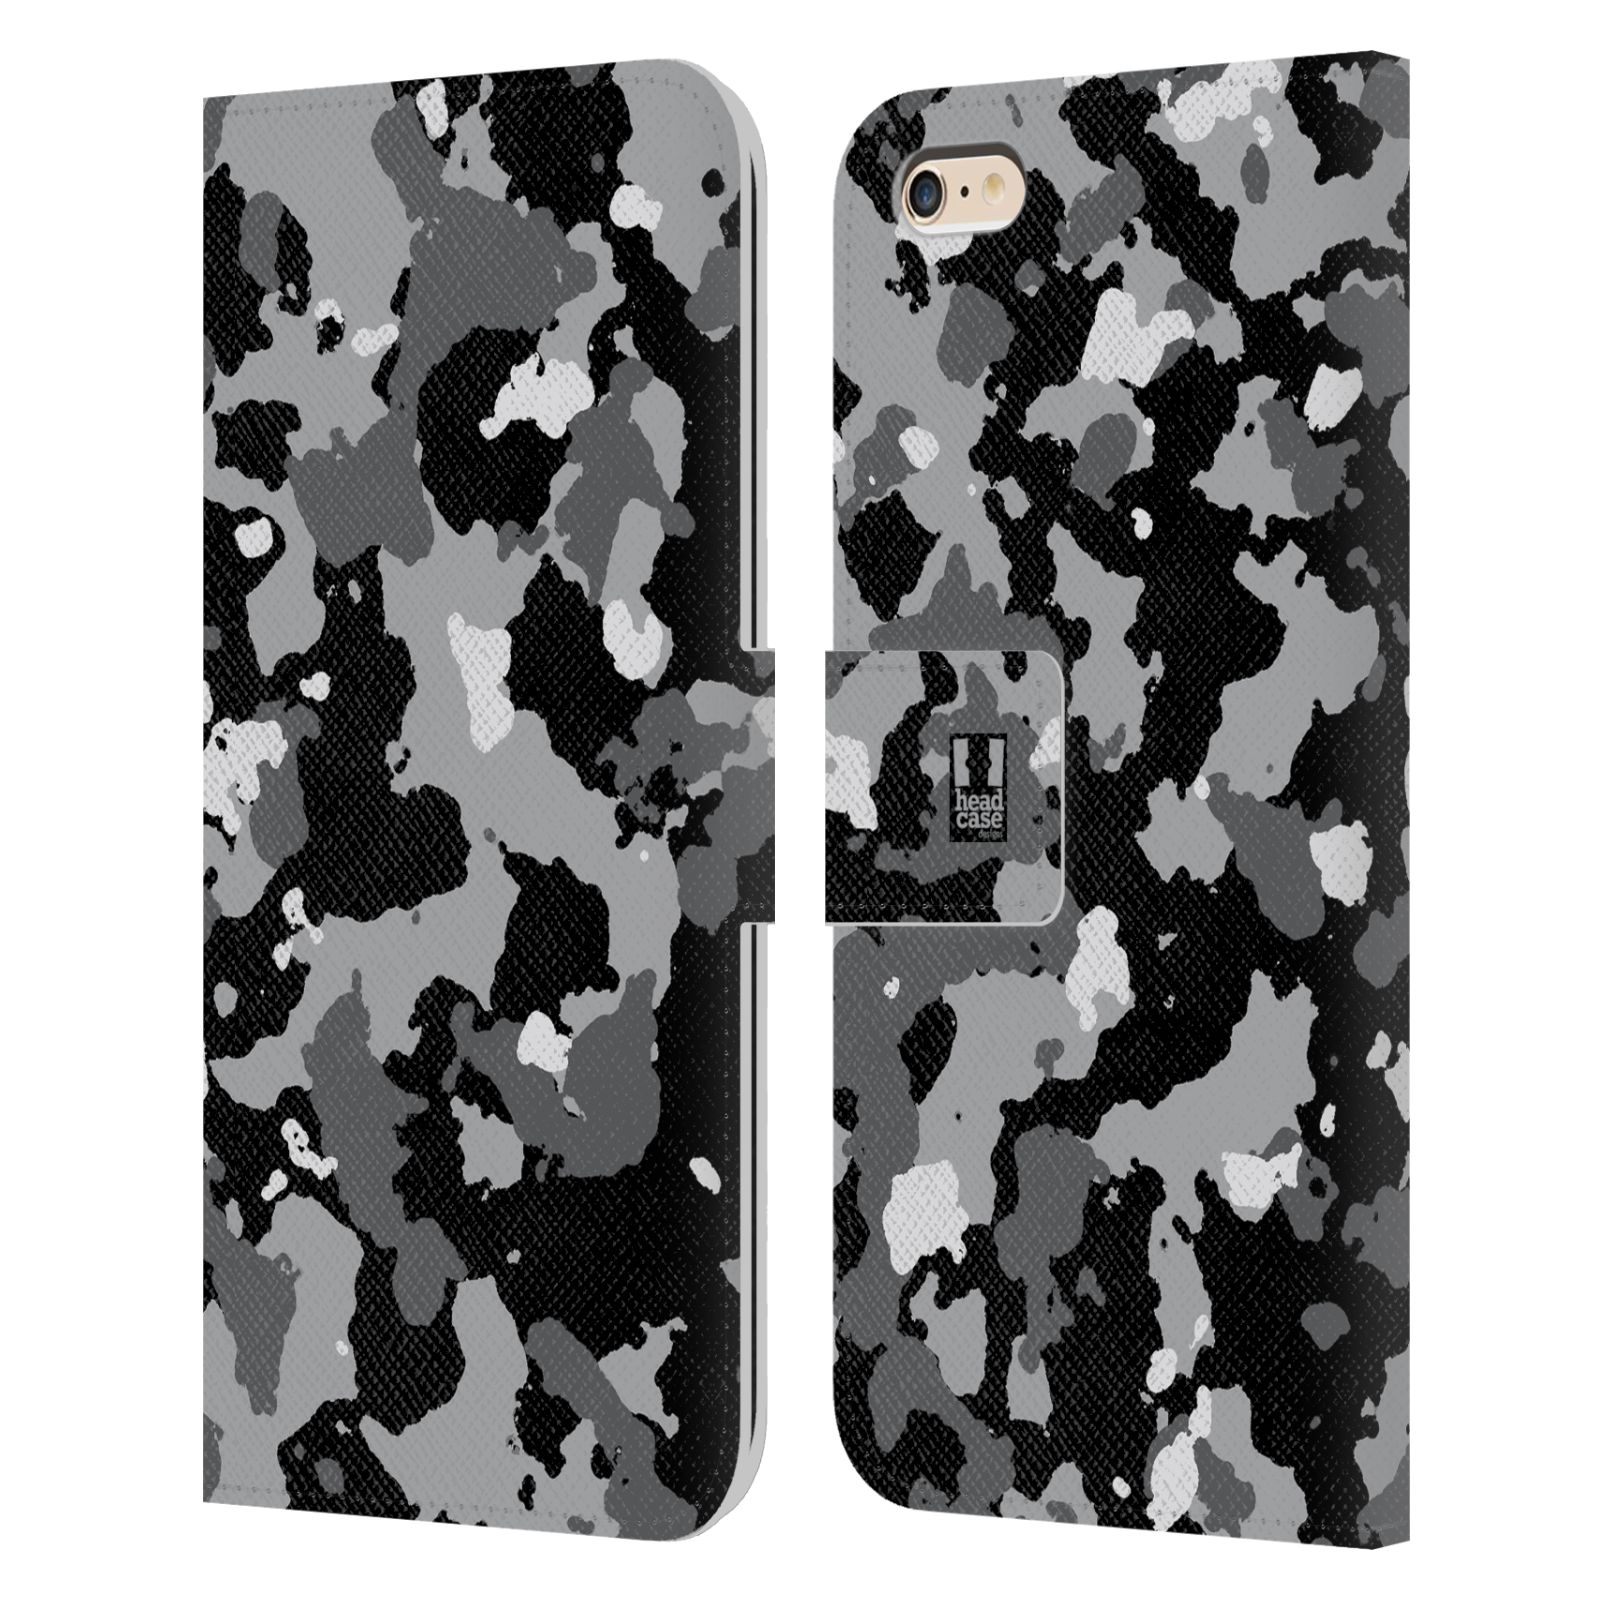 Pouzdro na mobil Apple Iphone 6 PLUS / 6S PLUS - Head Case - kamuflaž černá a šedá